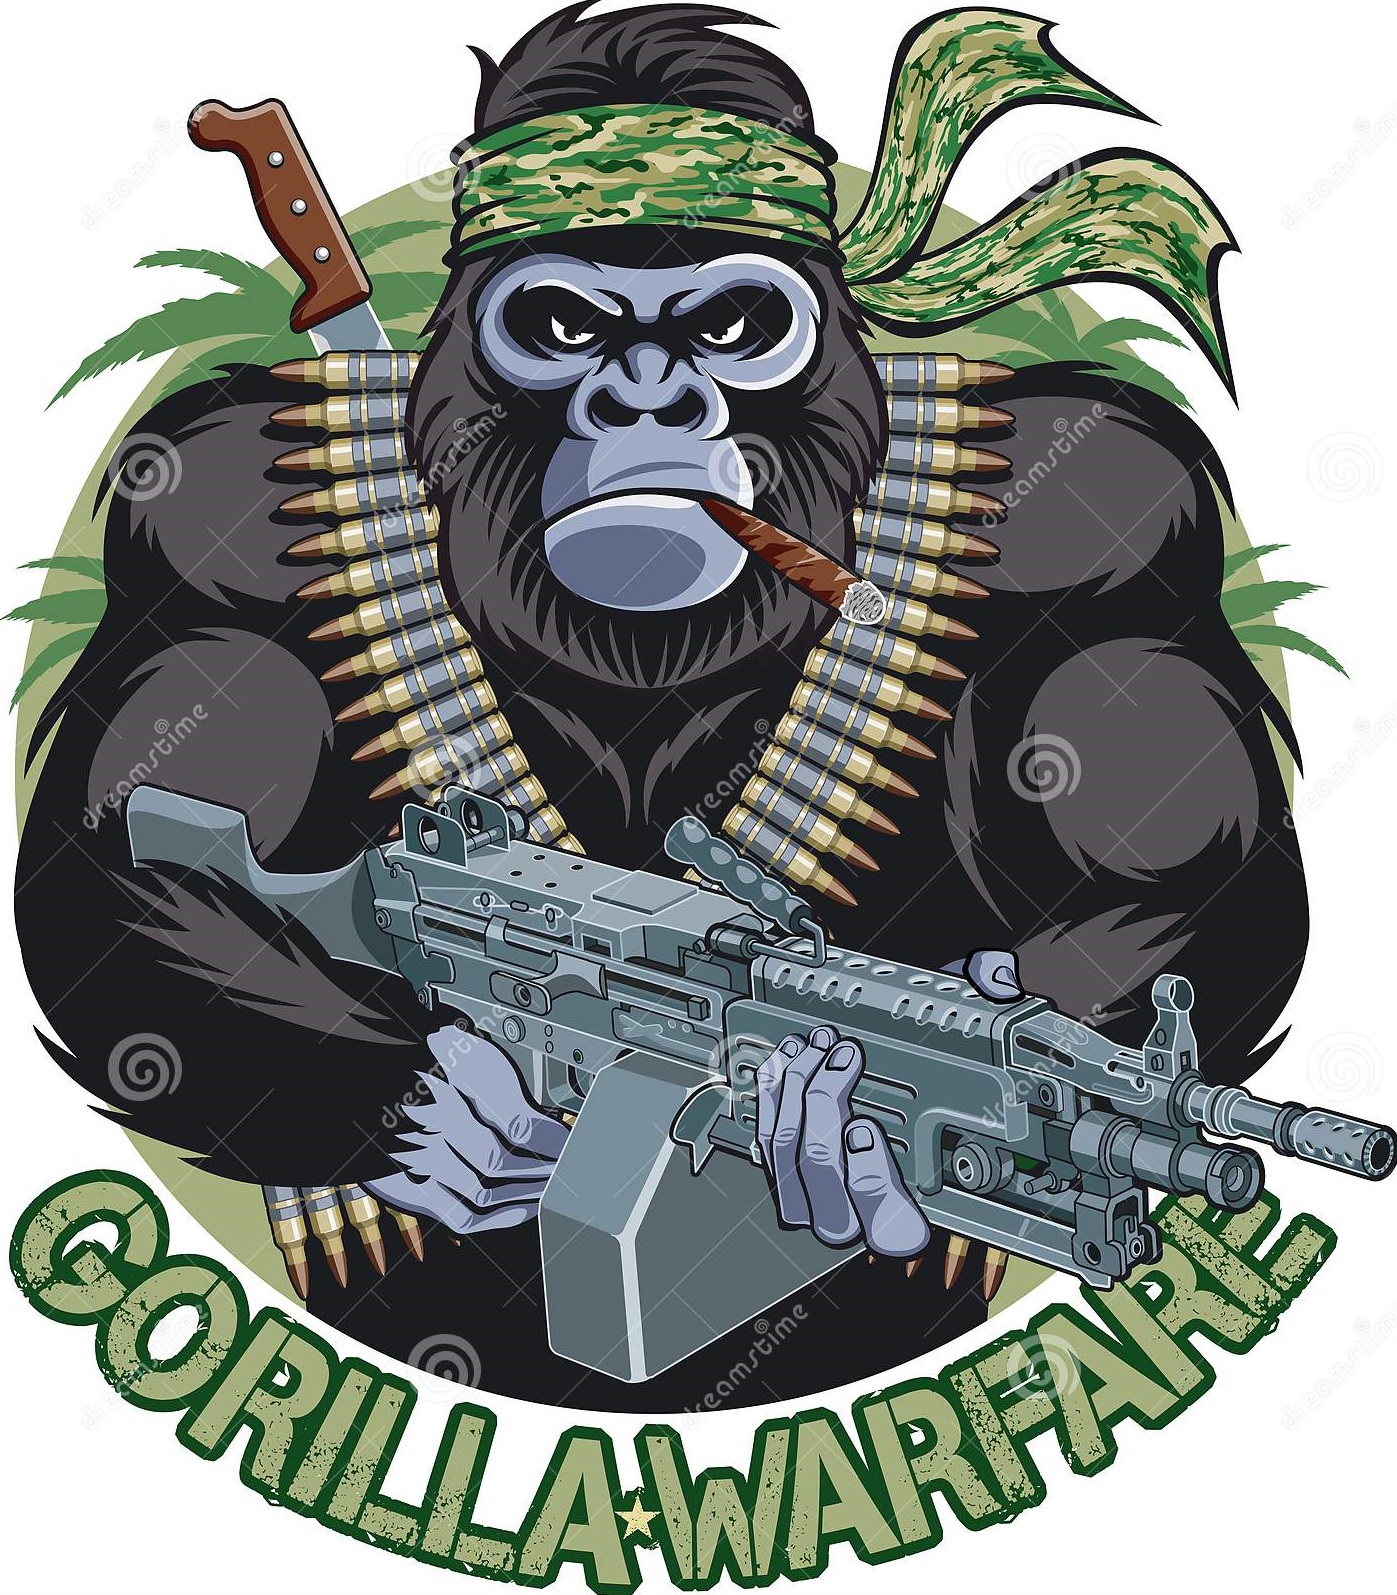 gorilla-bandana-cigar-crossed-ammunition-belts-holding-m-machine-gun-text-gorilla-warfare-gori...jpg